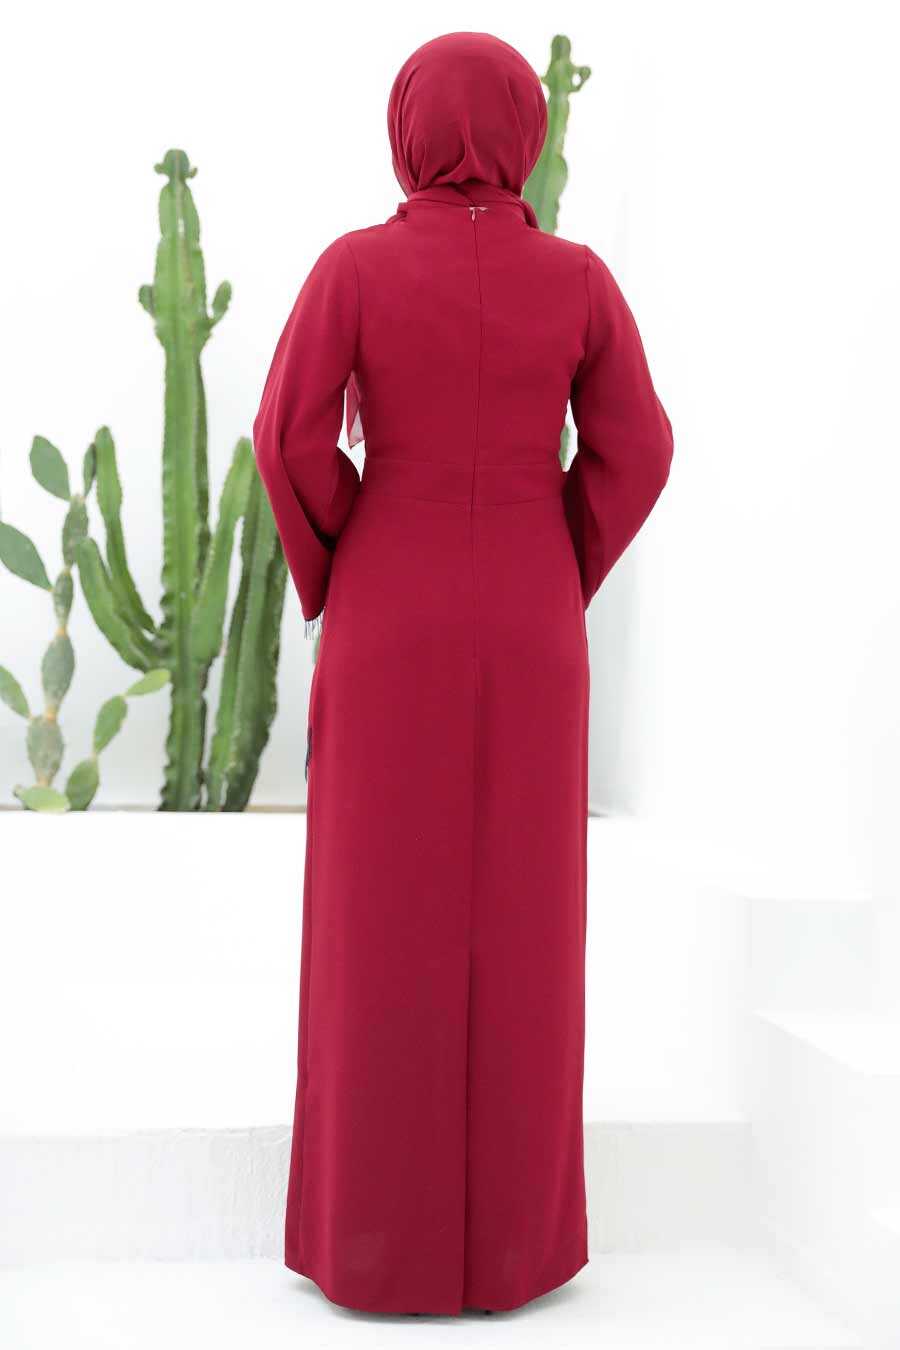 Claret Red Hijab Evening Dress 33150BR